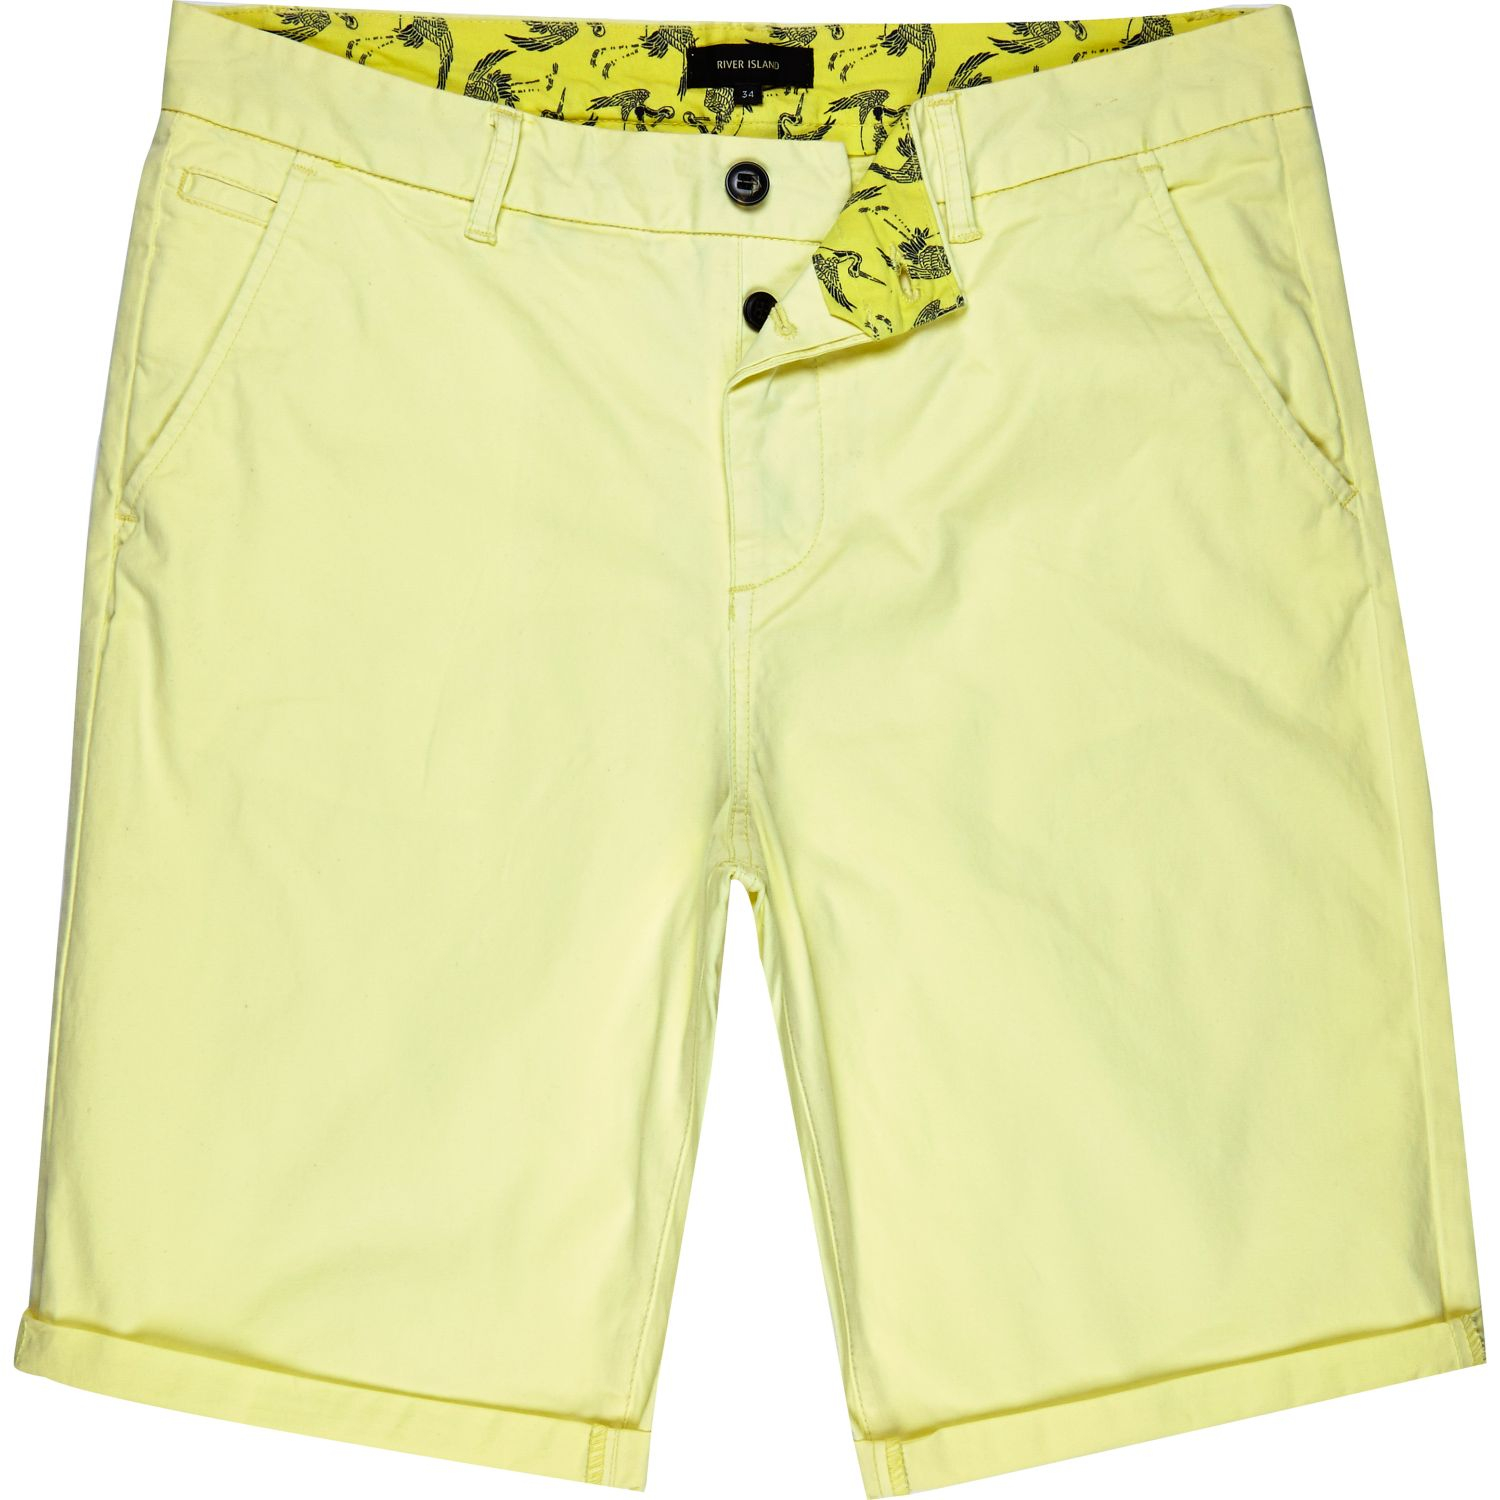 Cotton Yellow Lemon Chino Shorts 